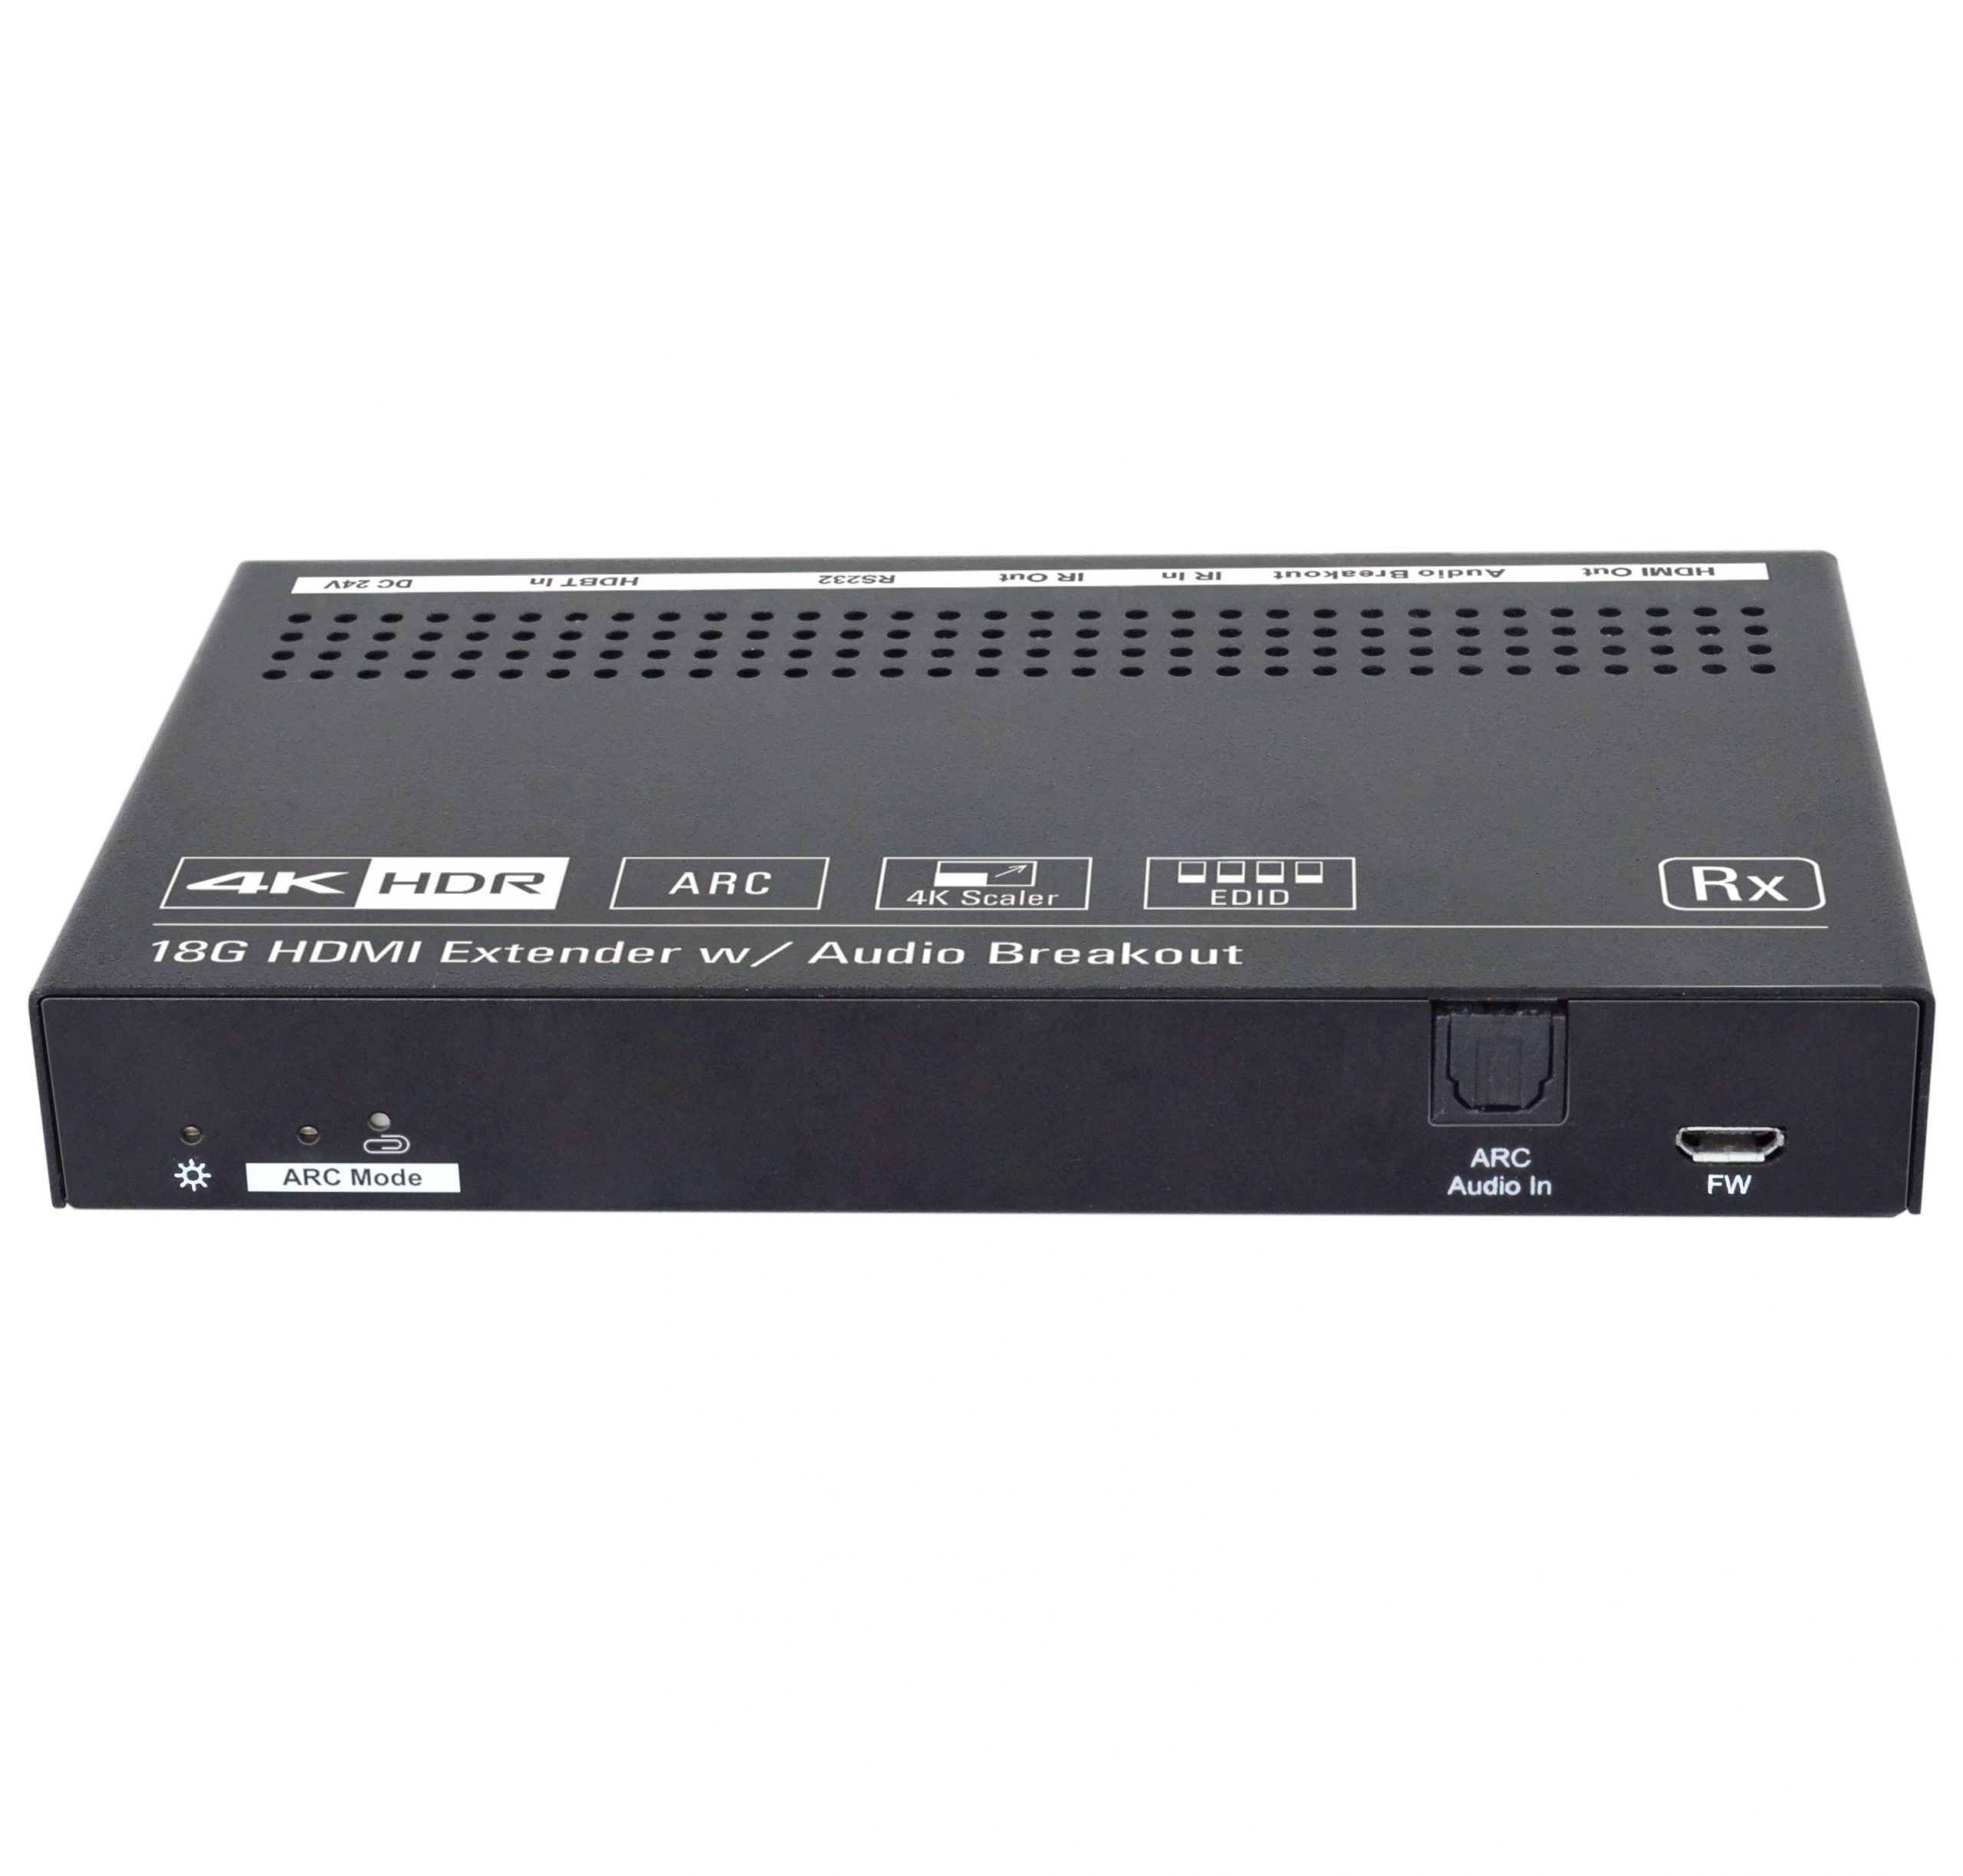 TPUH610SR + PSU HDMI2.0 extender over HDBT||